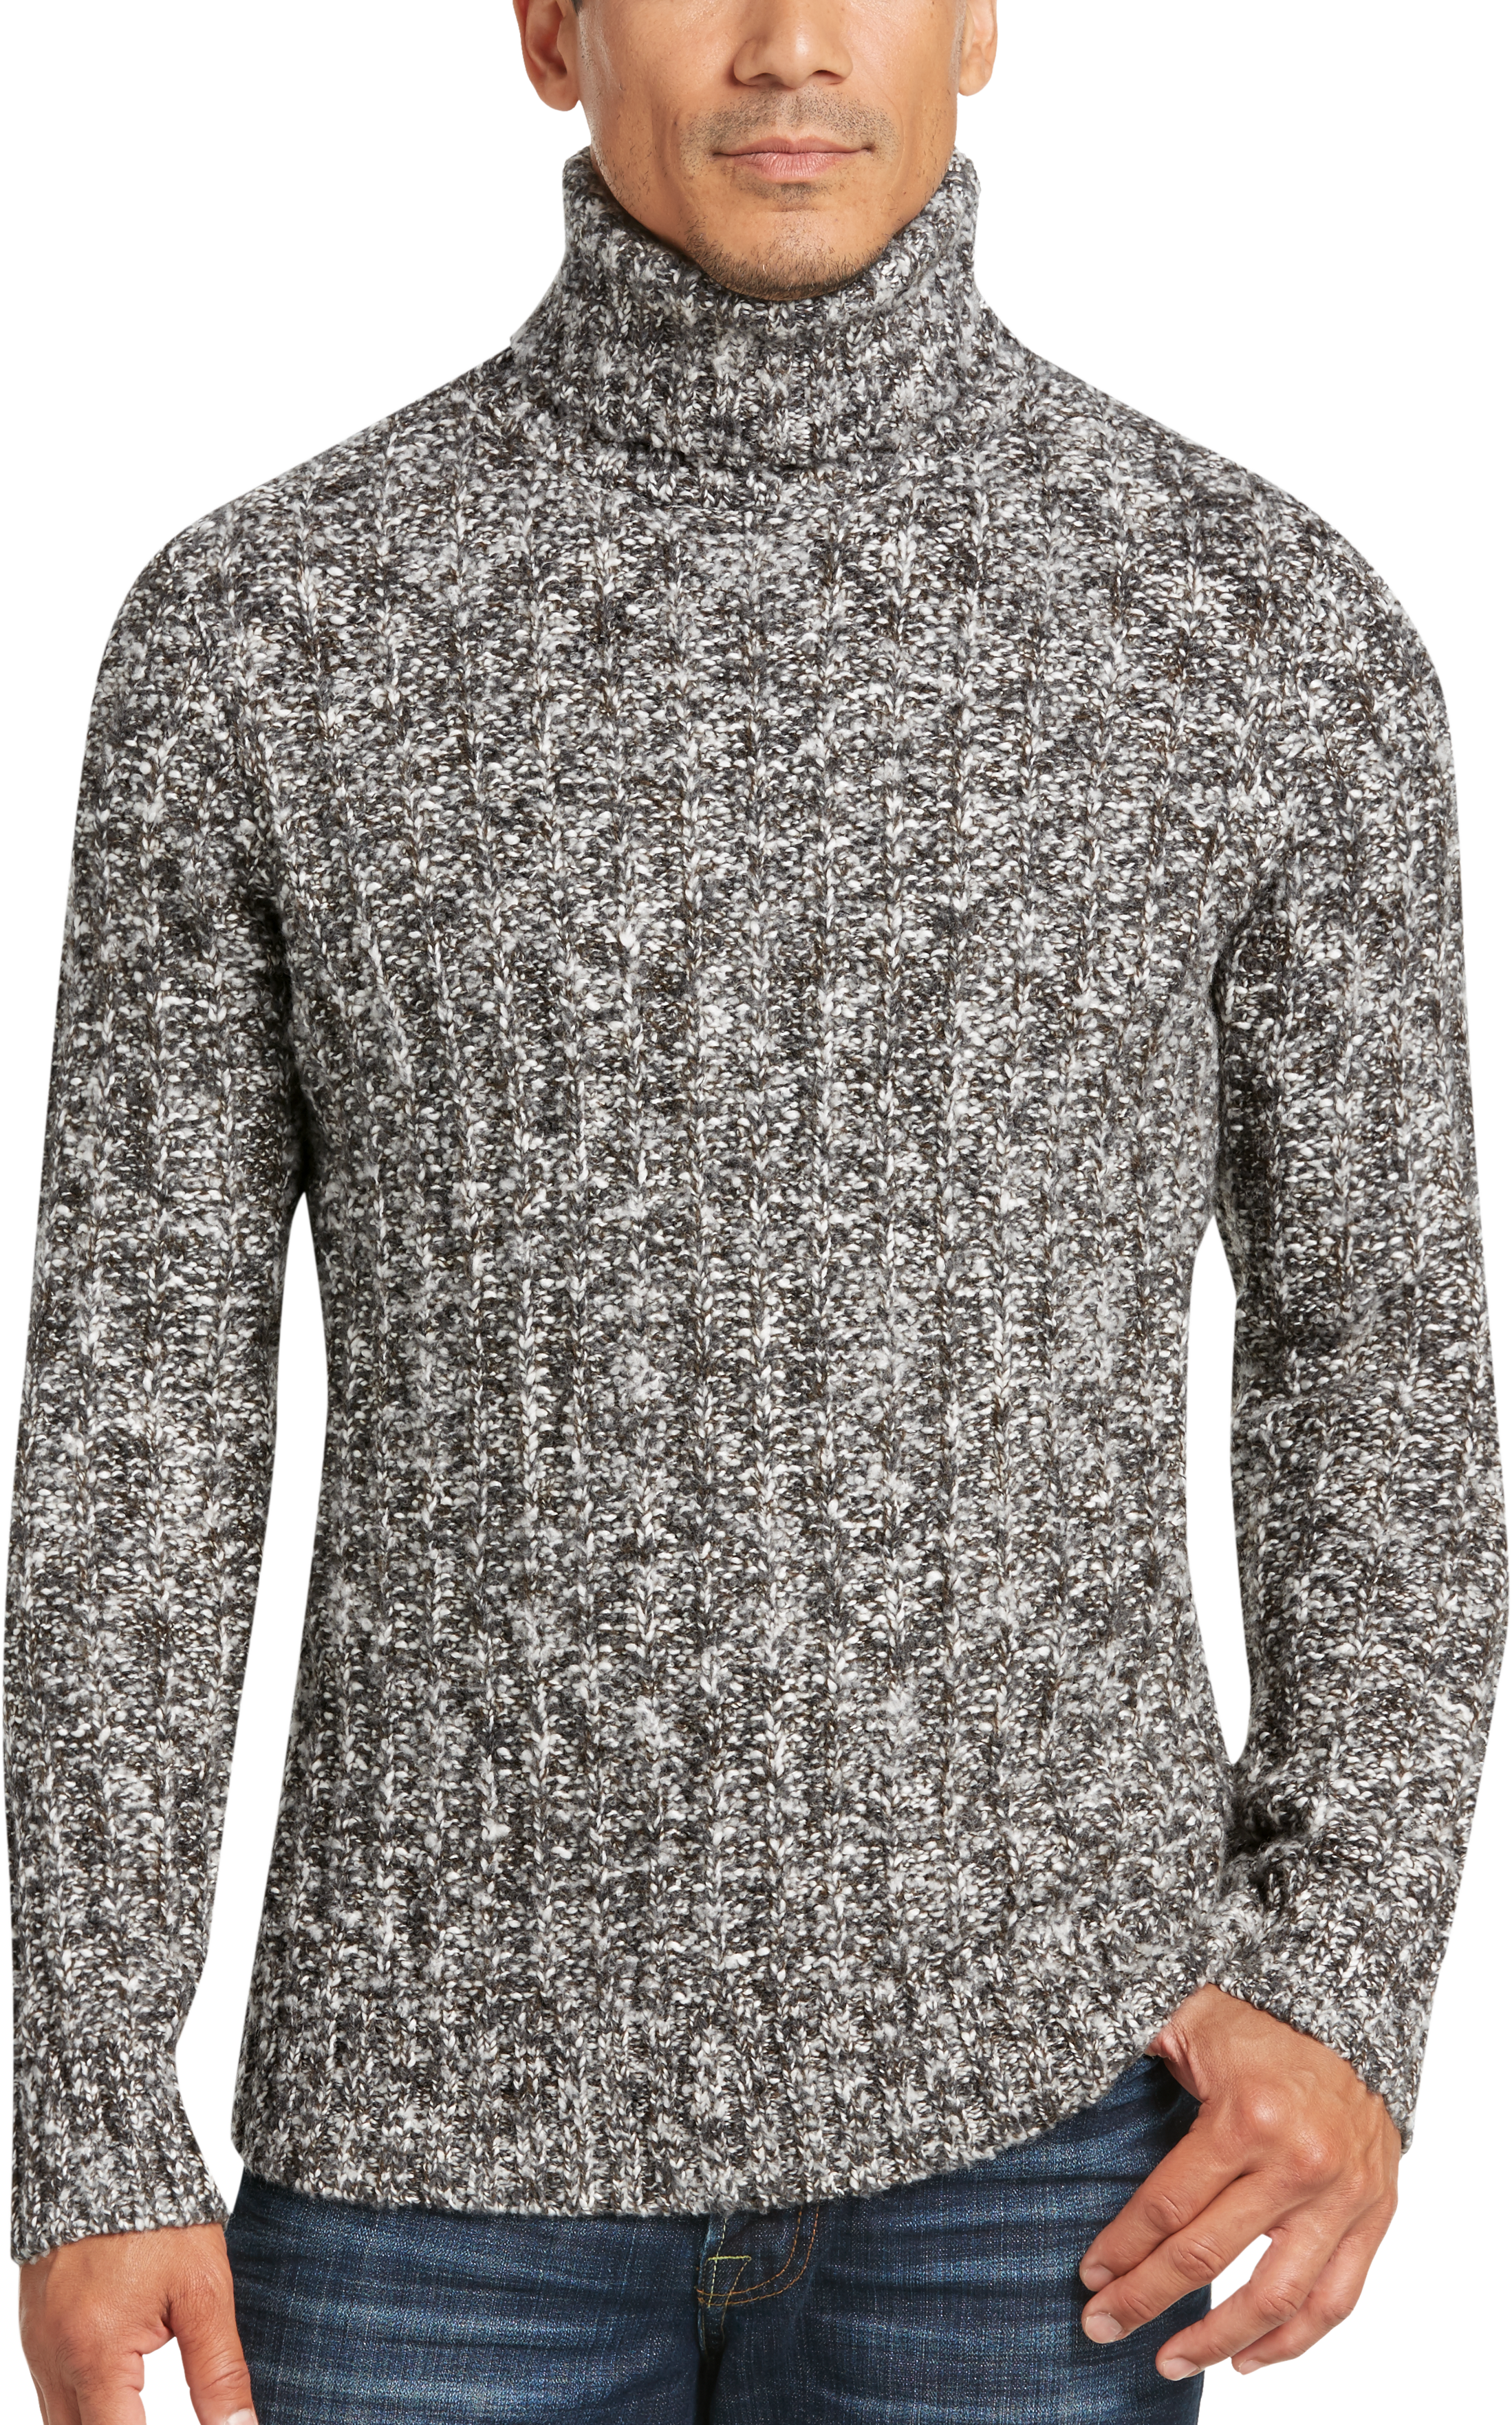 Joseph Abboud Black & White Turtleneck Sweater - Men's Sale | Men's ...